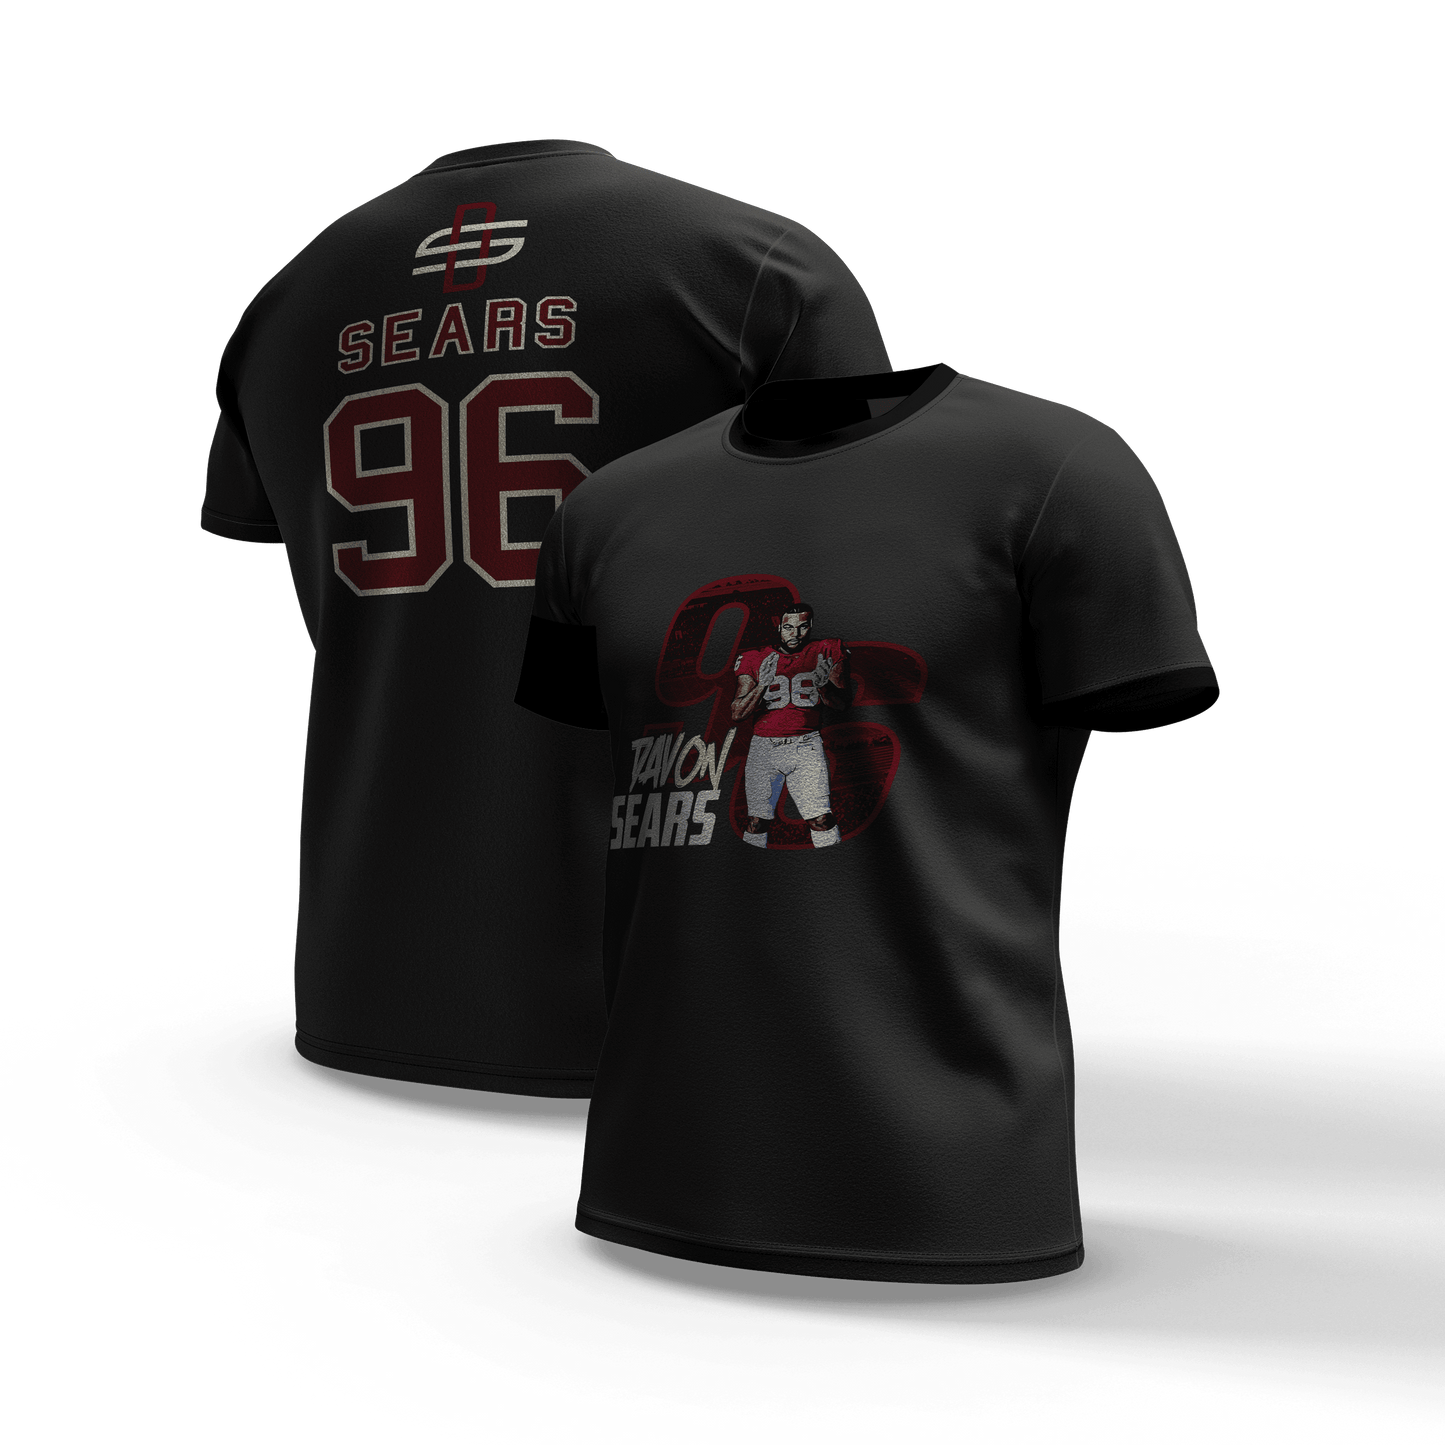 Davon Sears "Jersey" t-shirt - Fan Arch